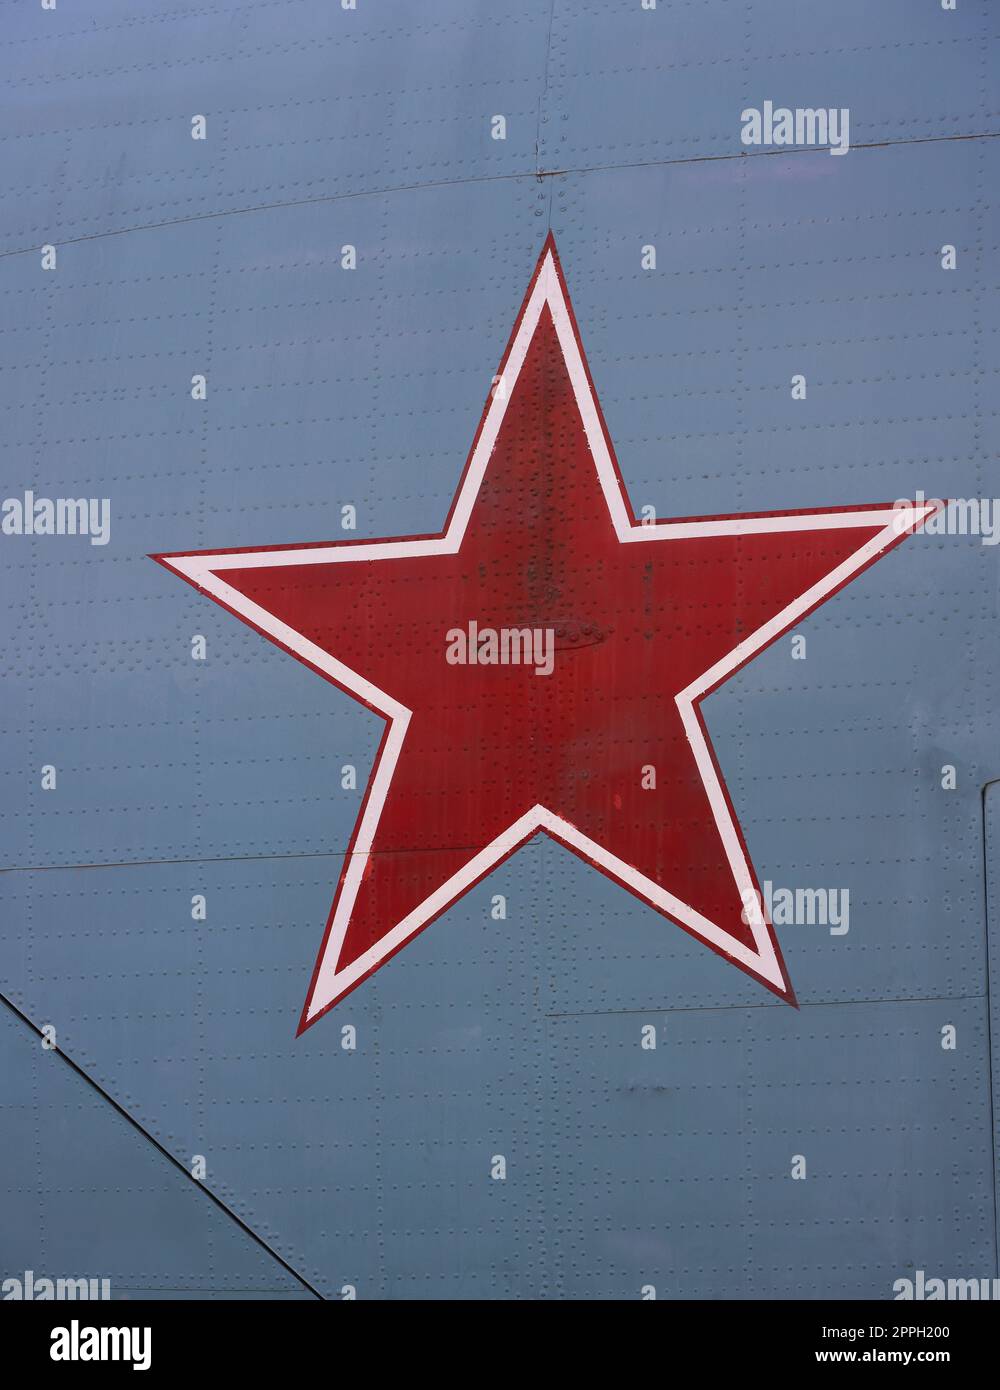 Soviet Union red star symbol on military aircraft Stock Photo